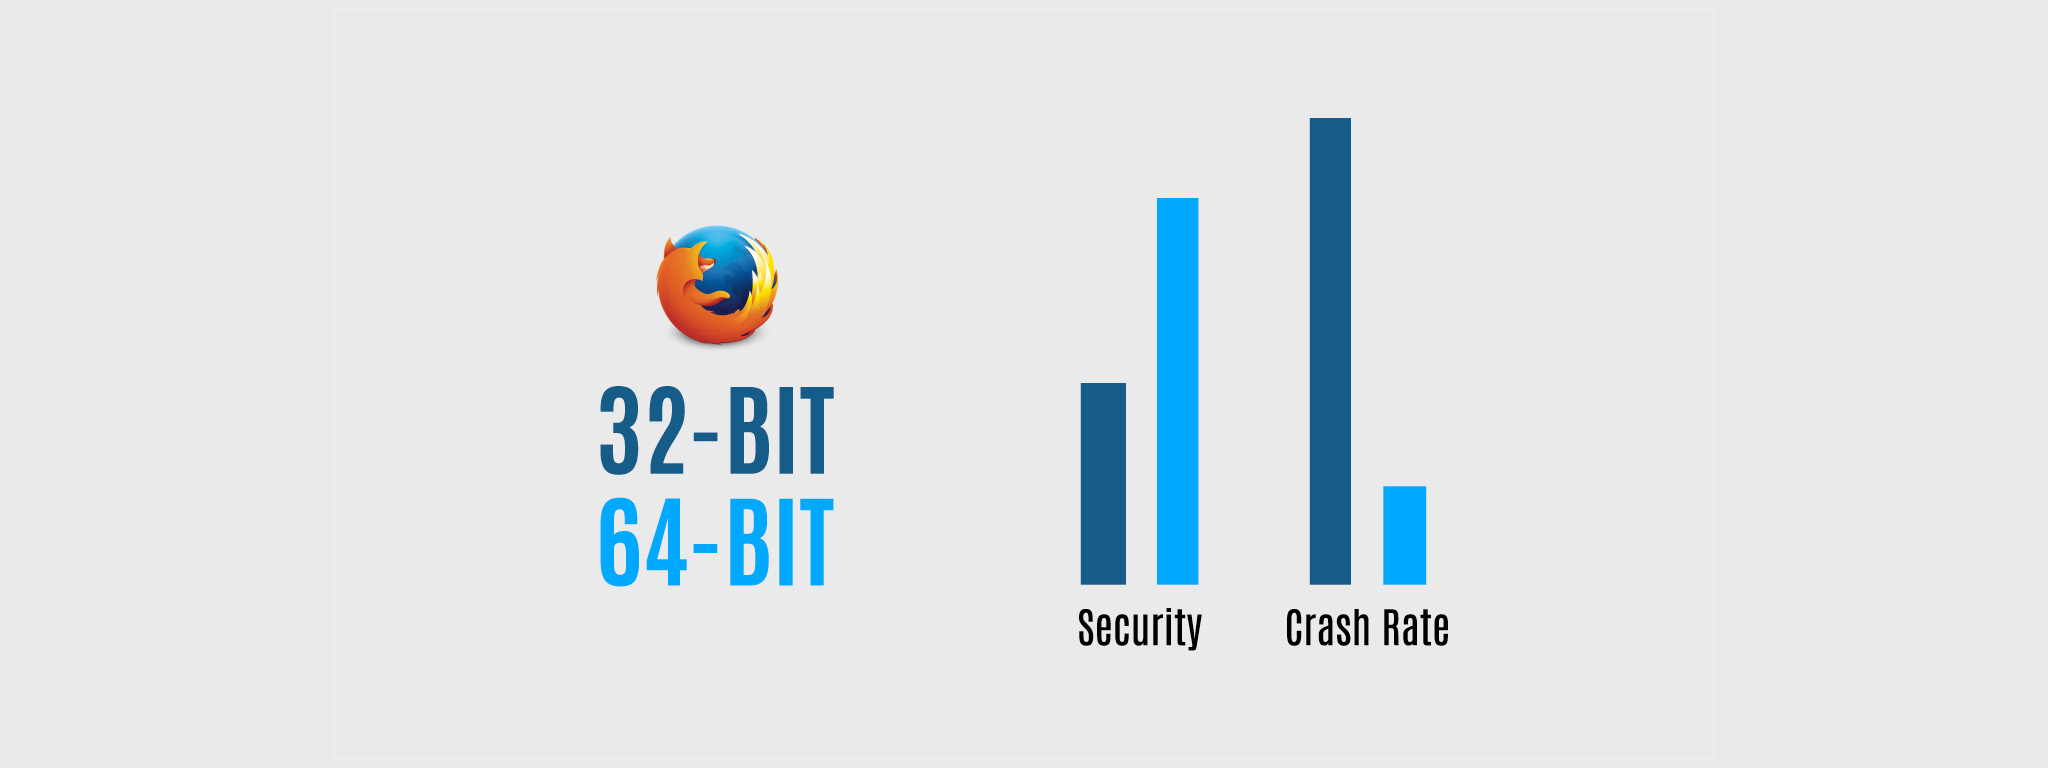 Firefox phiên bản 64-bit trên Windows ít bị Crash hơn, bảo mật tốt hơn